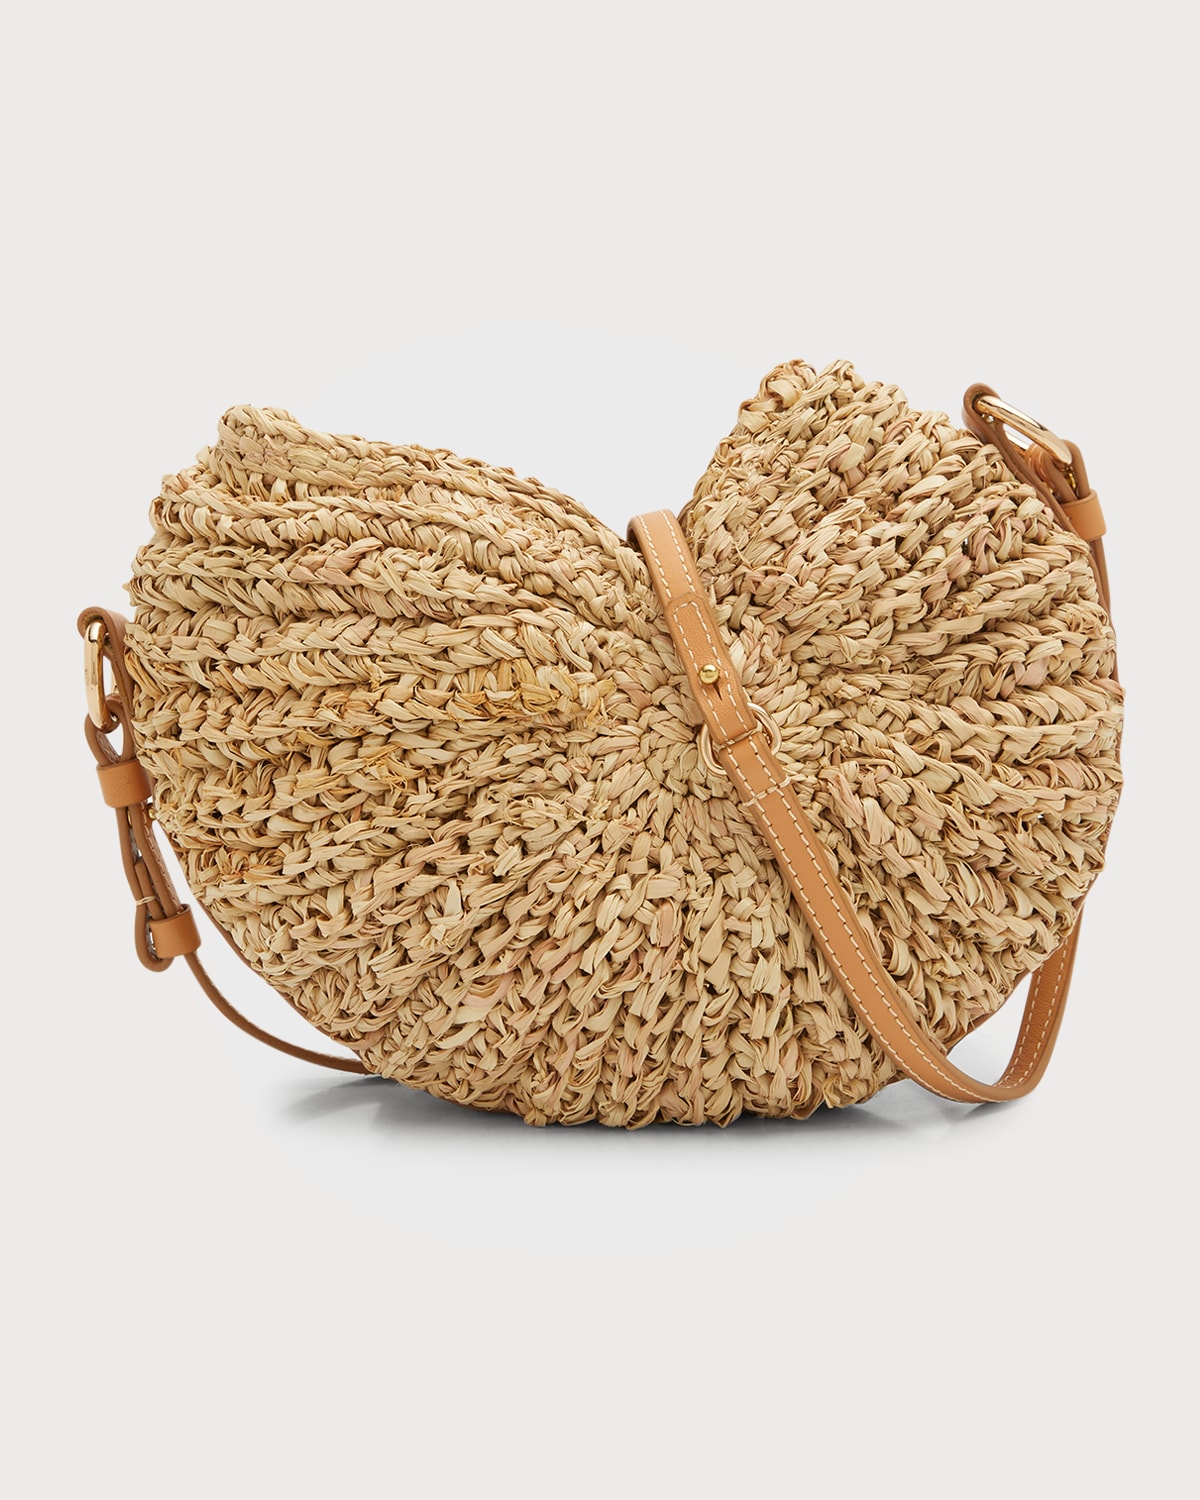 The Cesi Conch Raffia Shoulder Bag